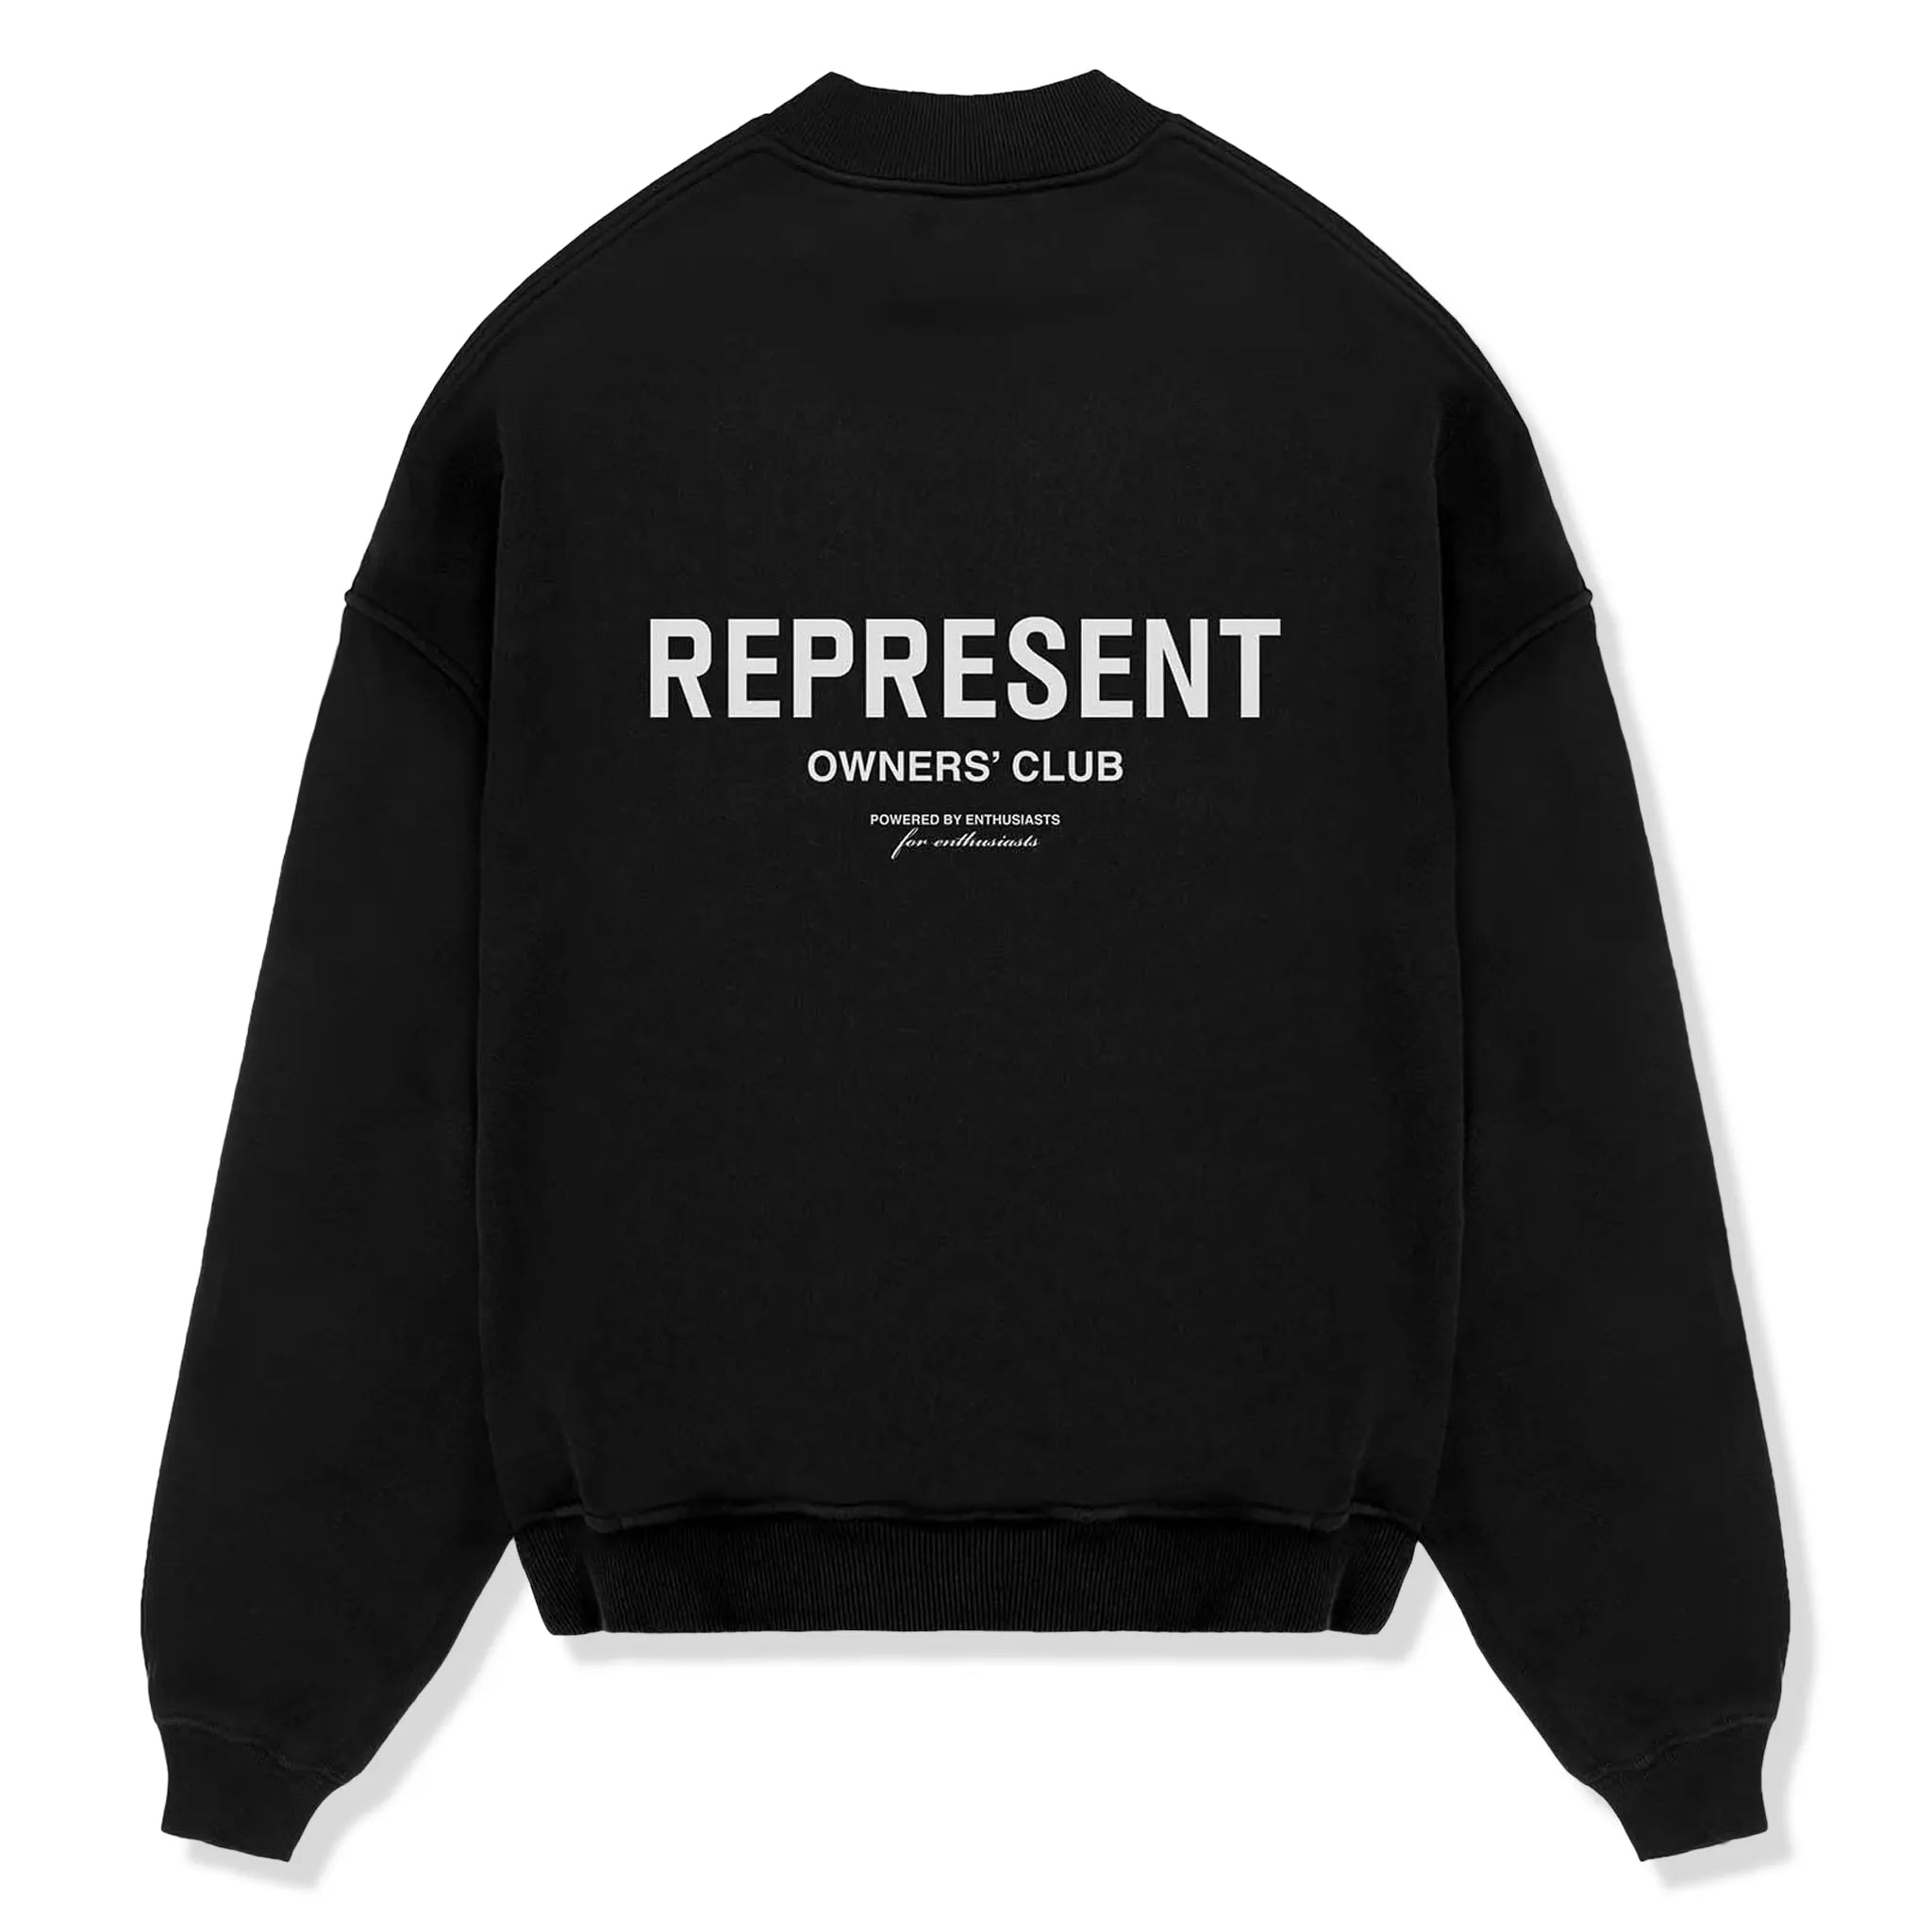 Back view of Represent Owners Club Black Sweatshirt M04159-01